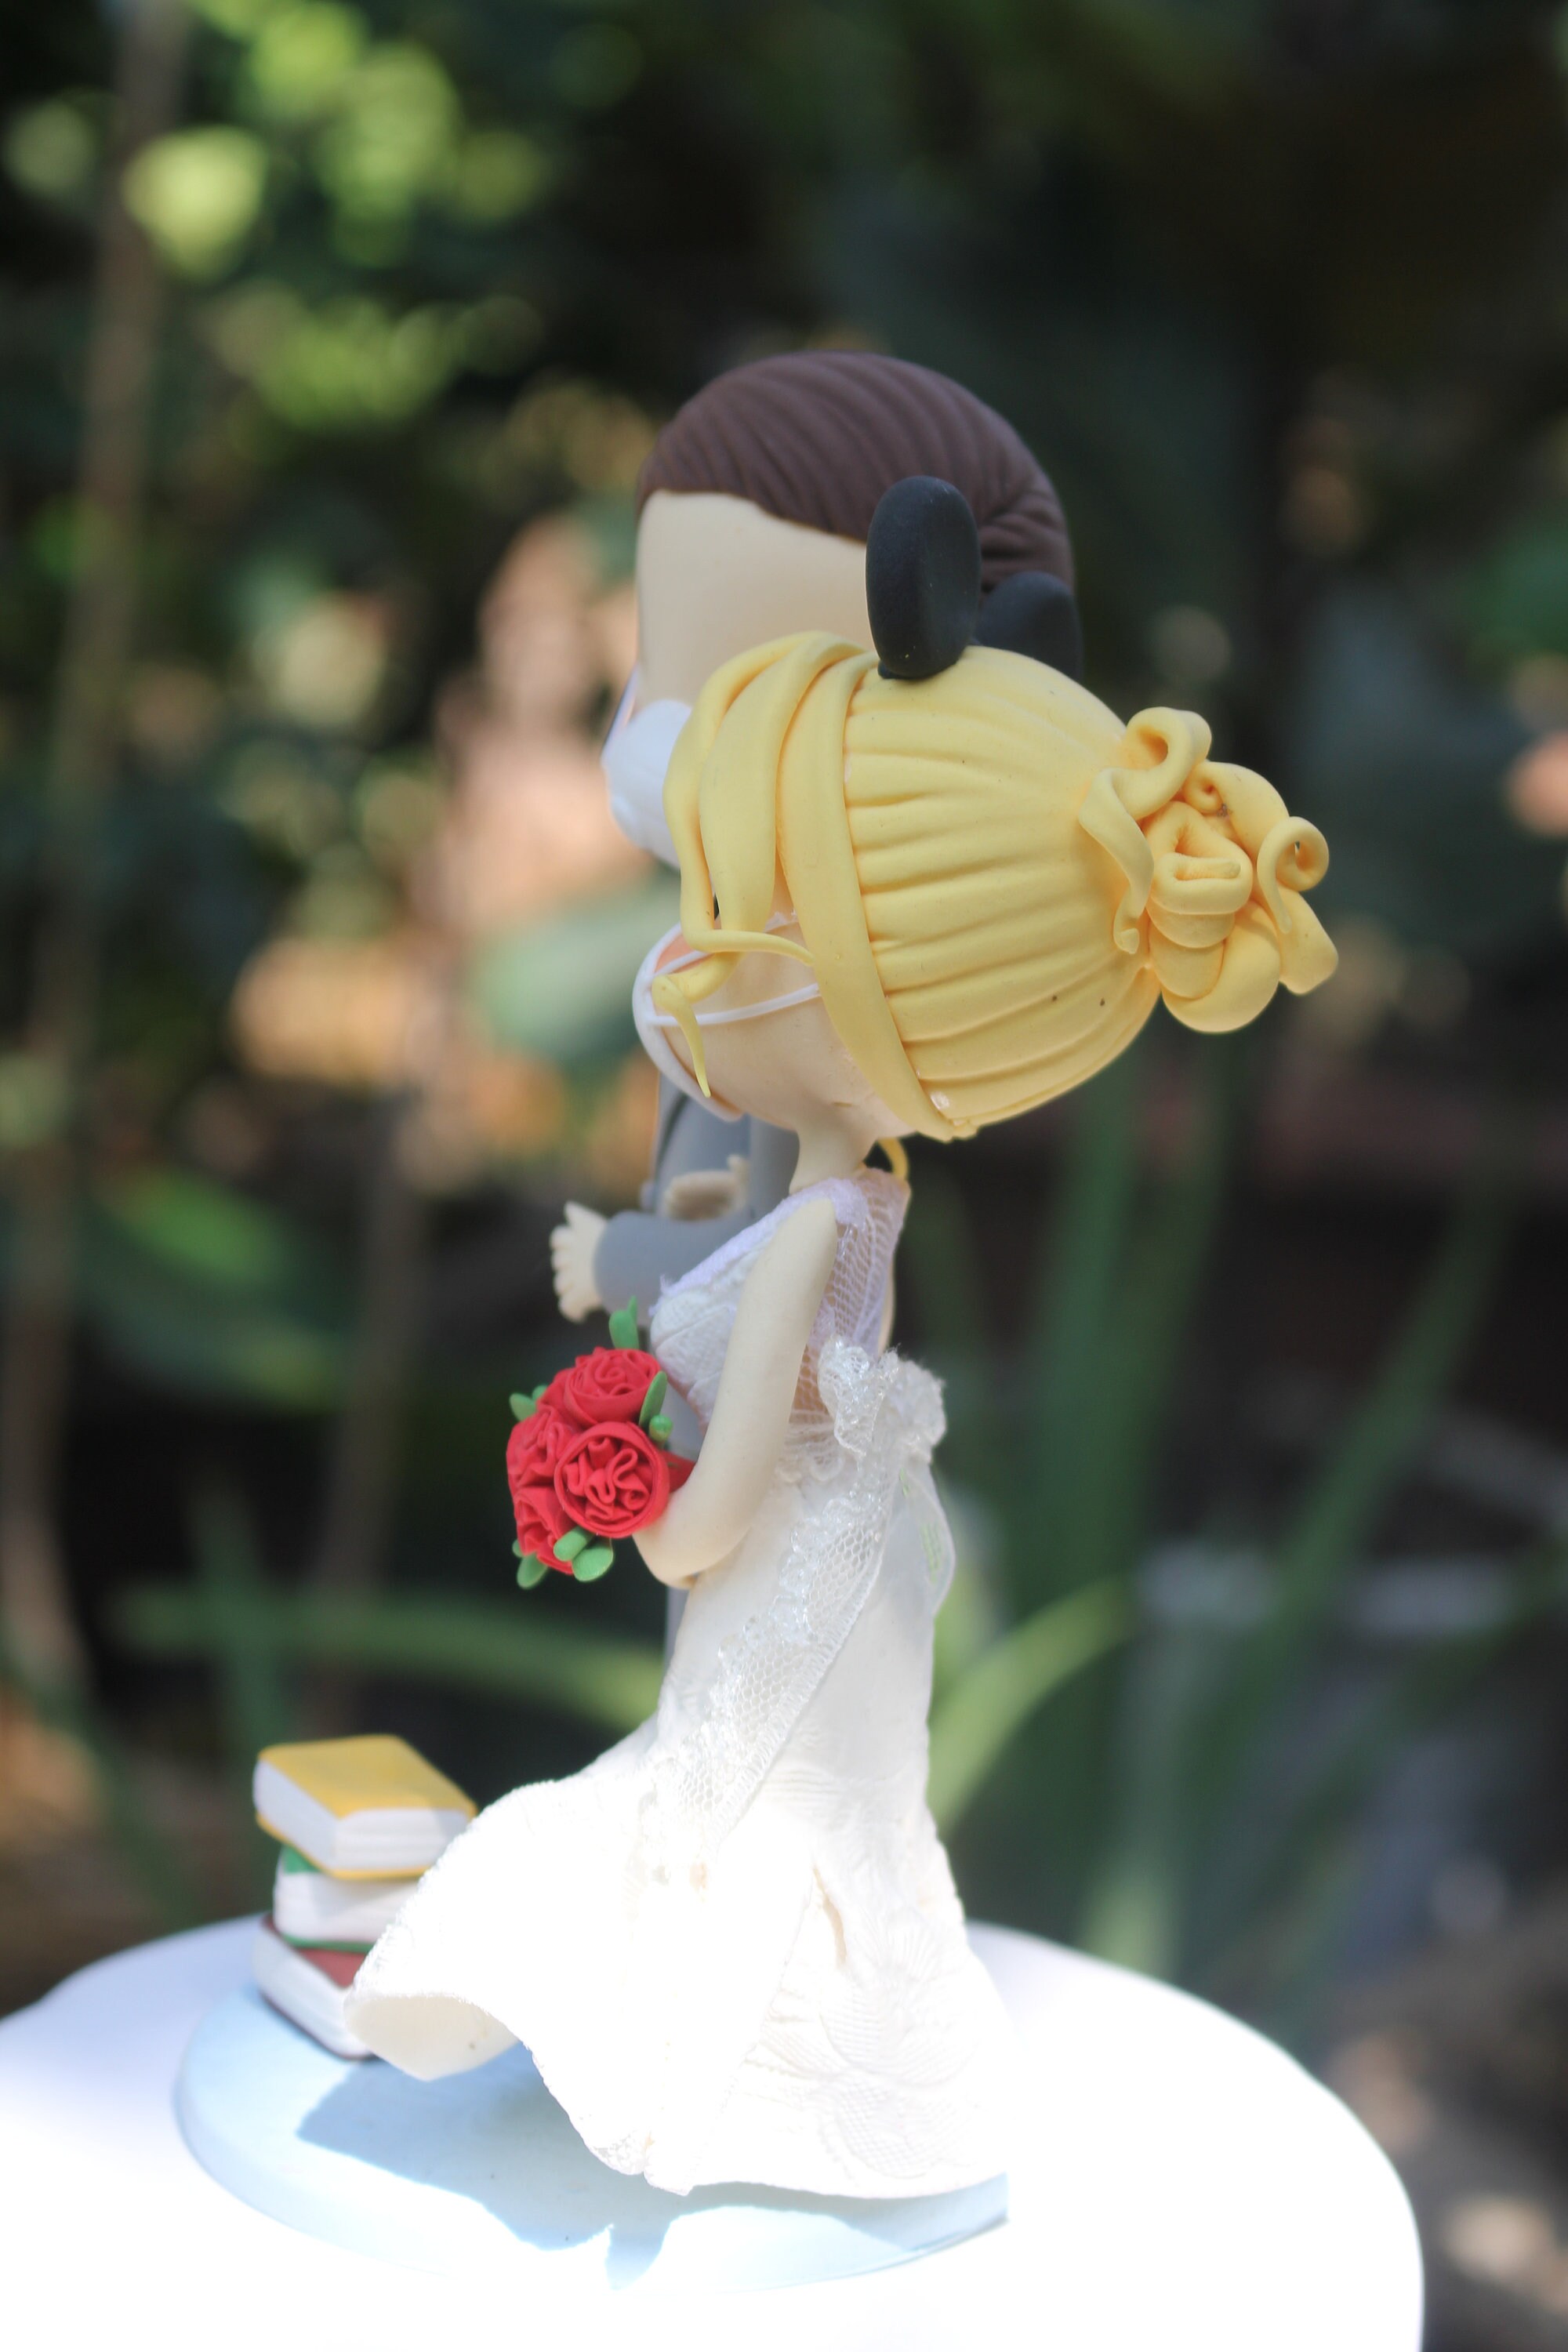 Bookworm and Mickey wedding cake topper Quarantine wedding topper bride and groom clay topper custom wedding keepsake